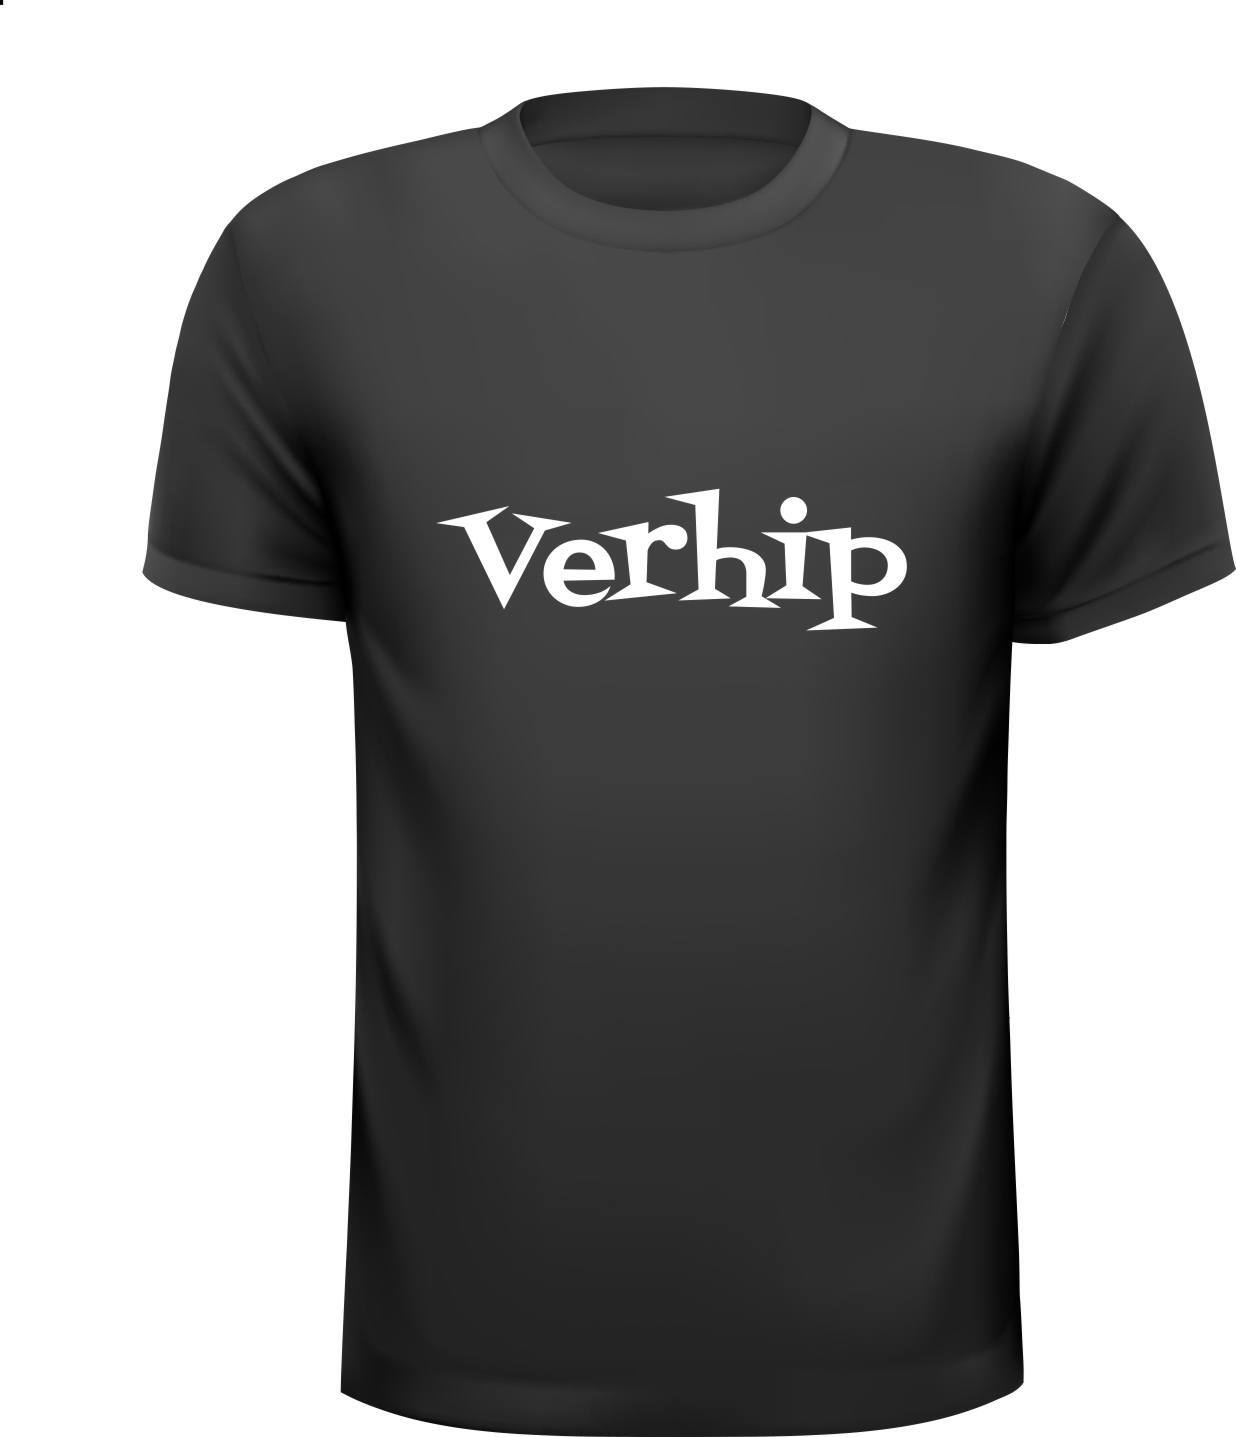 Verhip T-shirt